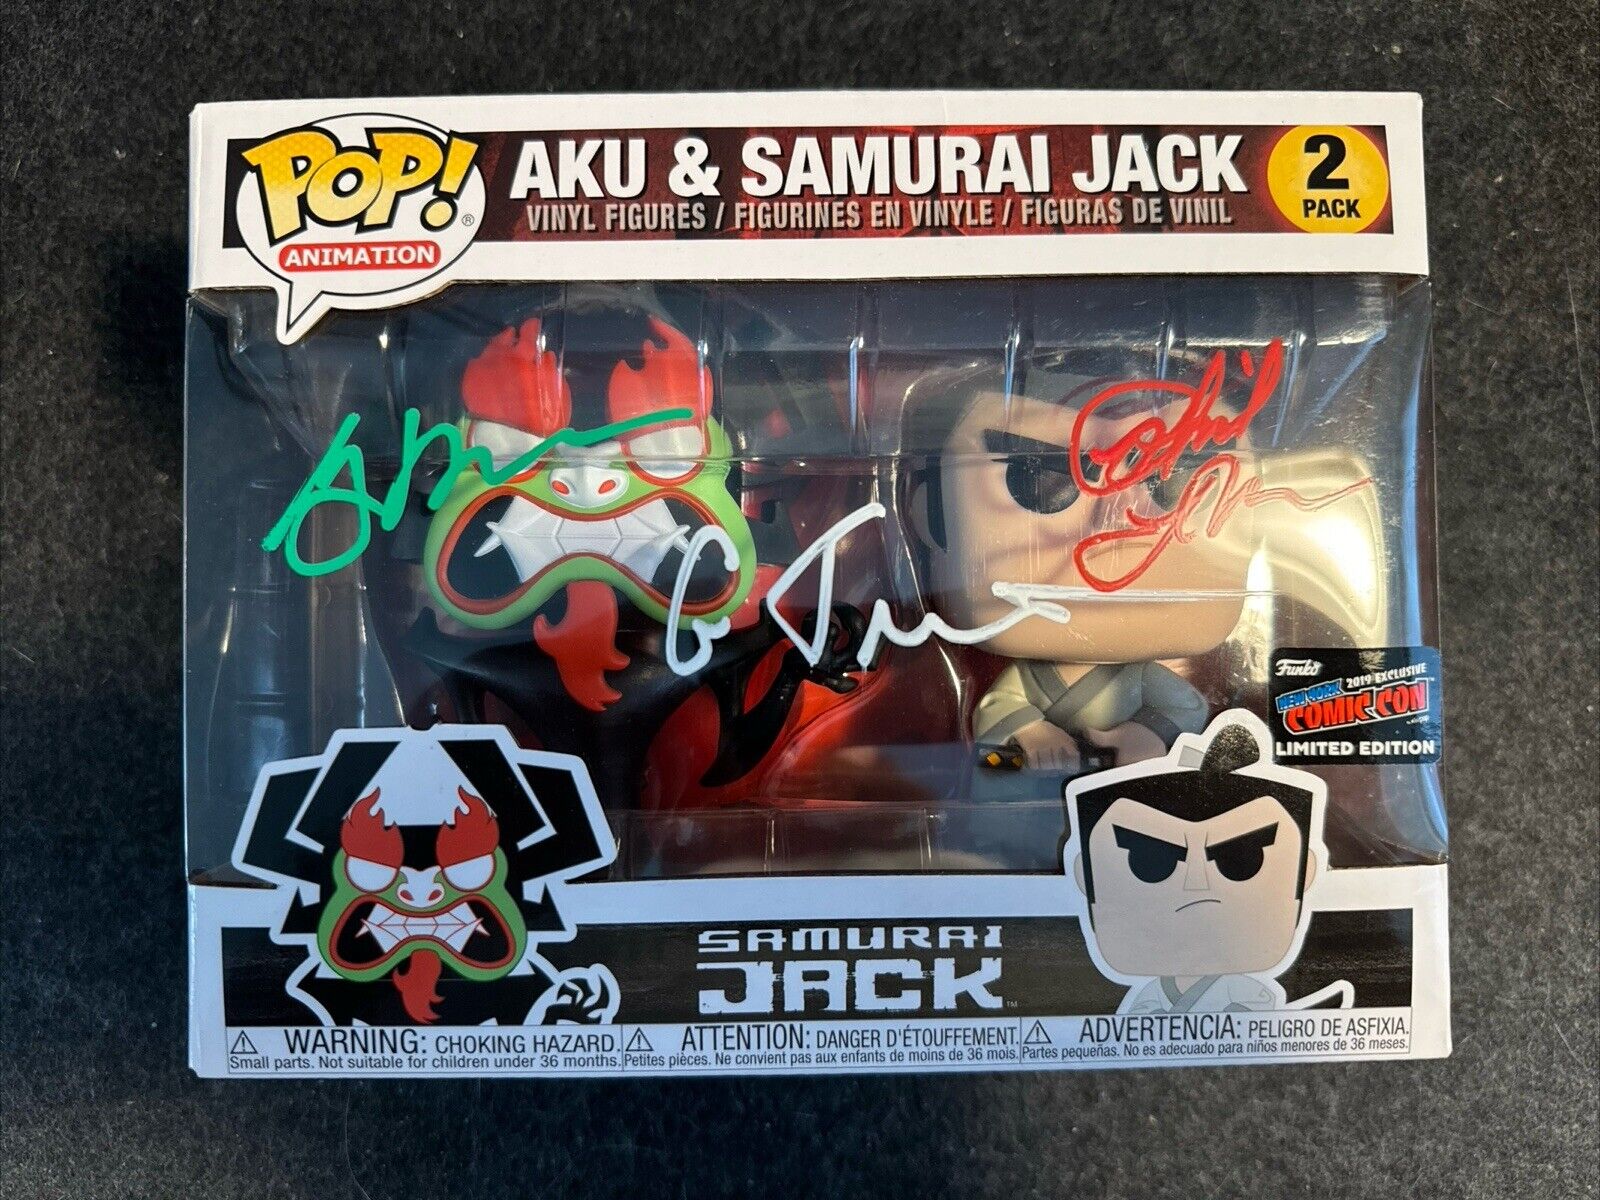 RARE Funko Pop: Samurai Jack - 2 Pack - Aku & Samurai Jack - NYCC SIGNED 3x 